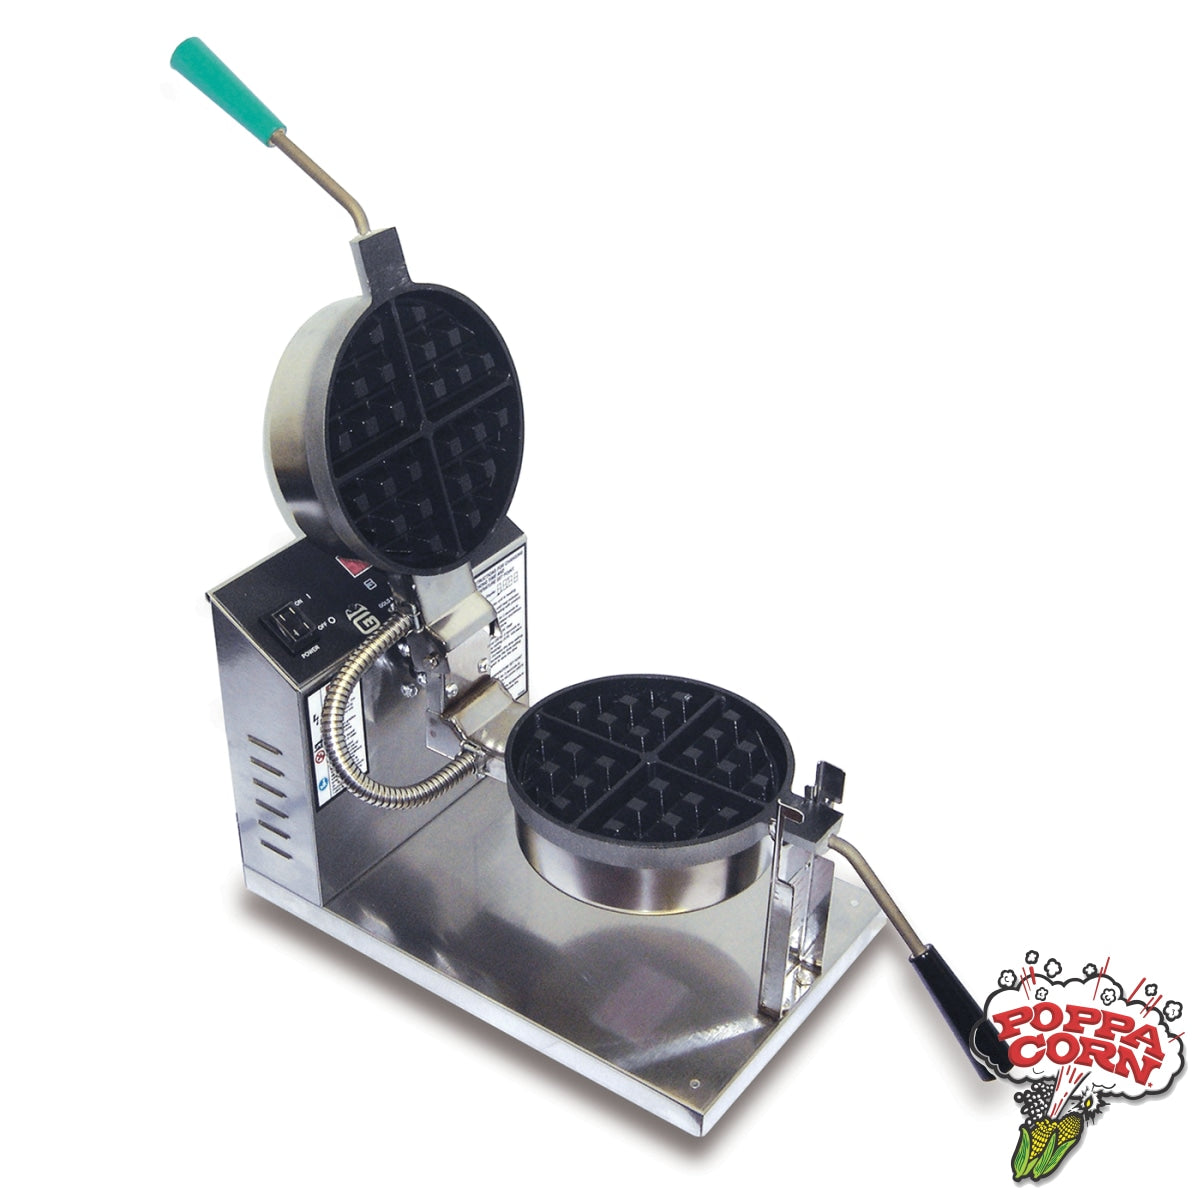 DEMO Round Belgian Waffle Baker with Non-stick Coating and Electronic Control - GM5021ETU- - Poppa Corn Corp